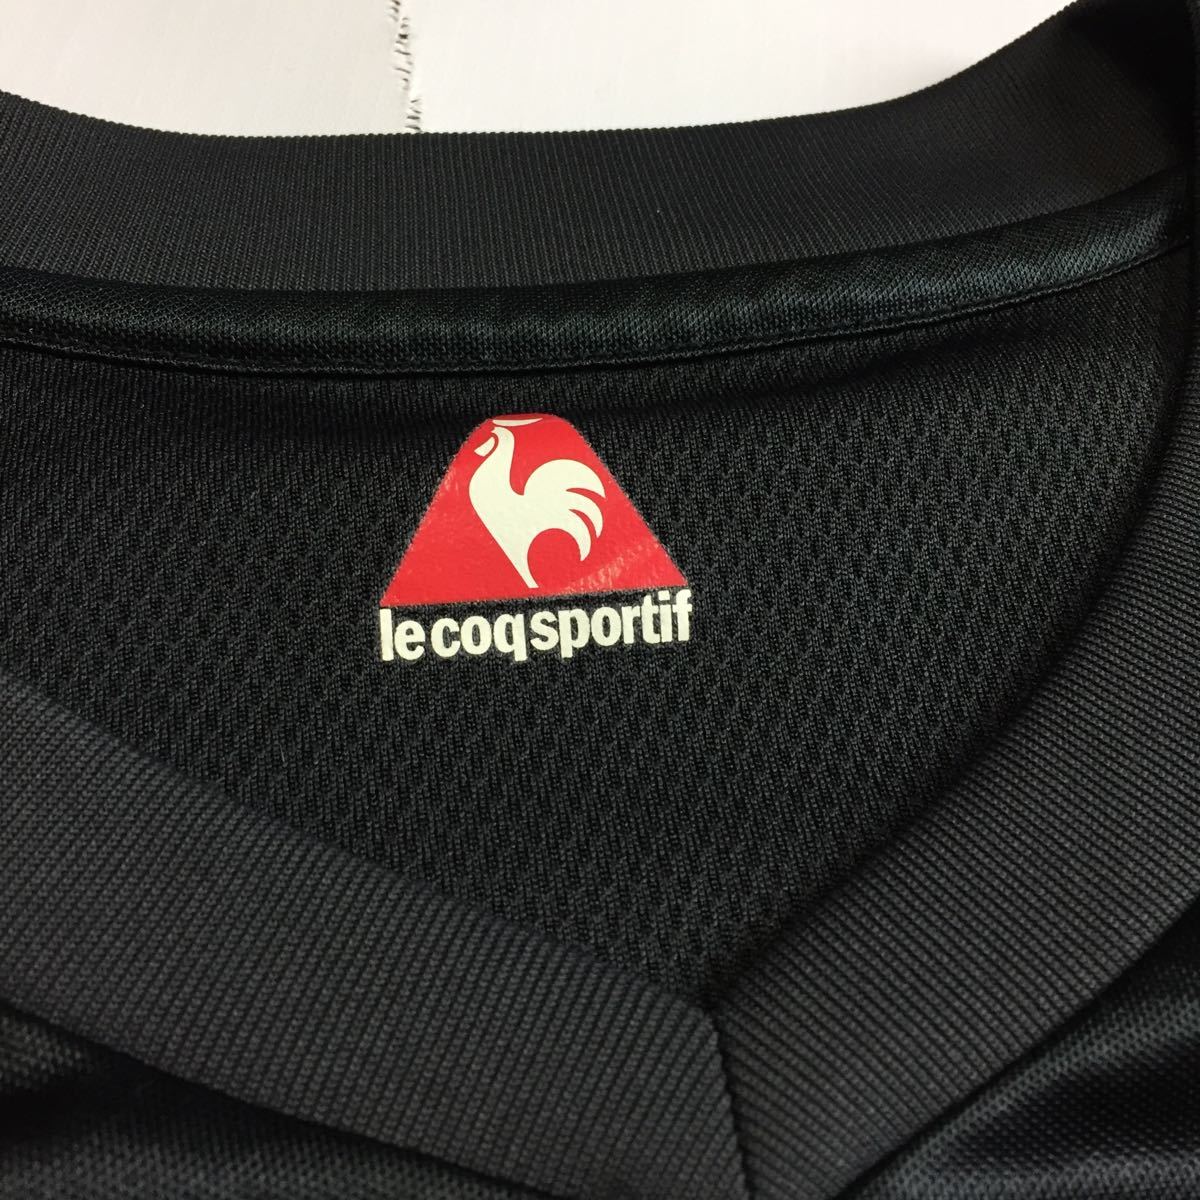 le coq sportif ルコックスポルティフ ドライシャツ サイズL 黒系 長袖 トップス 薄手 (管理番号7300)_画像2